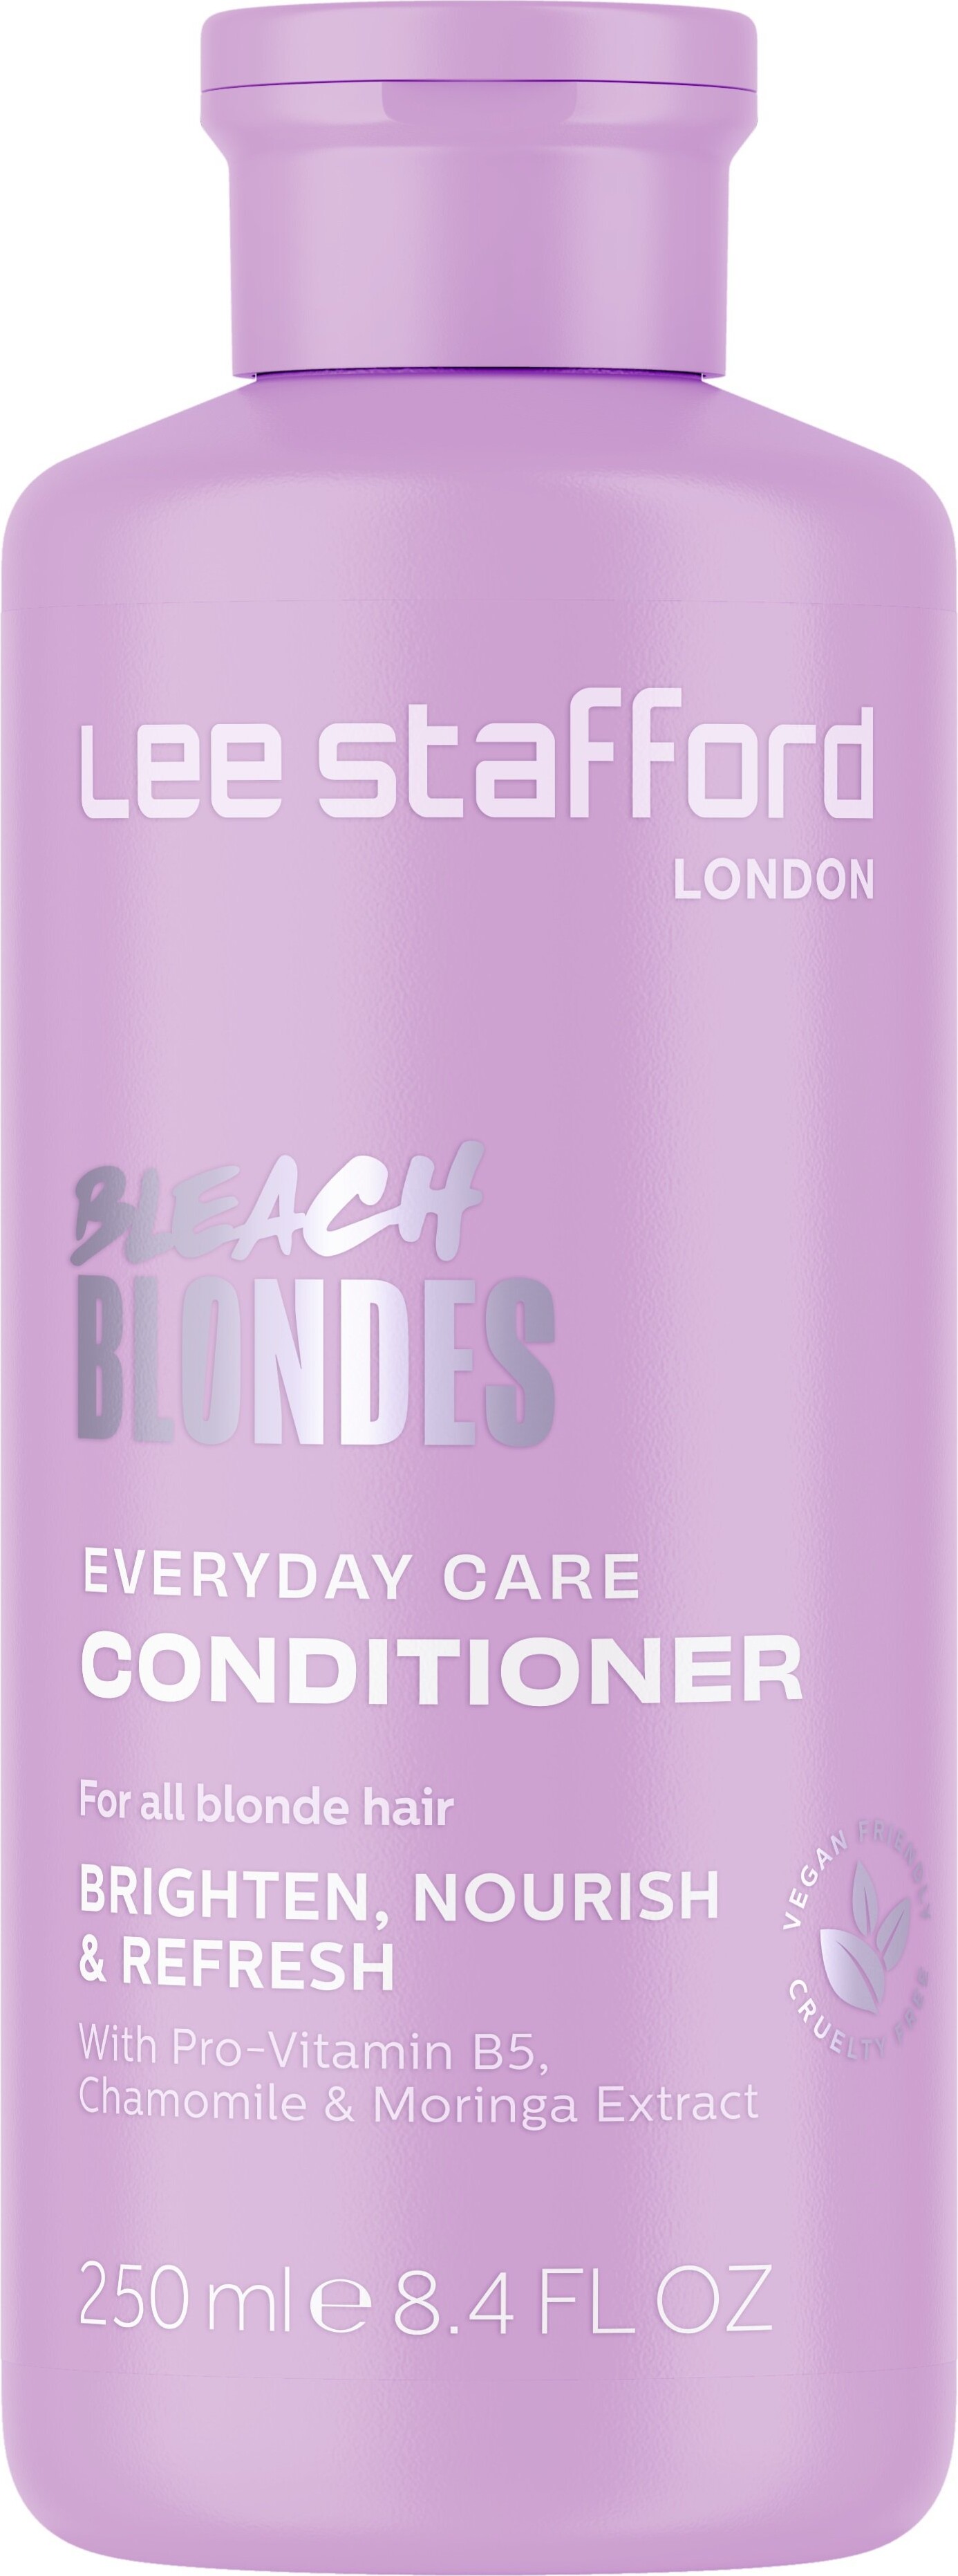 Se Lee Stafford - Bleach Blondes Everyday Care Conditioner - 250 Ml hos Gucca.dk